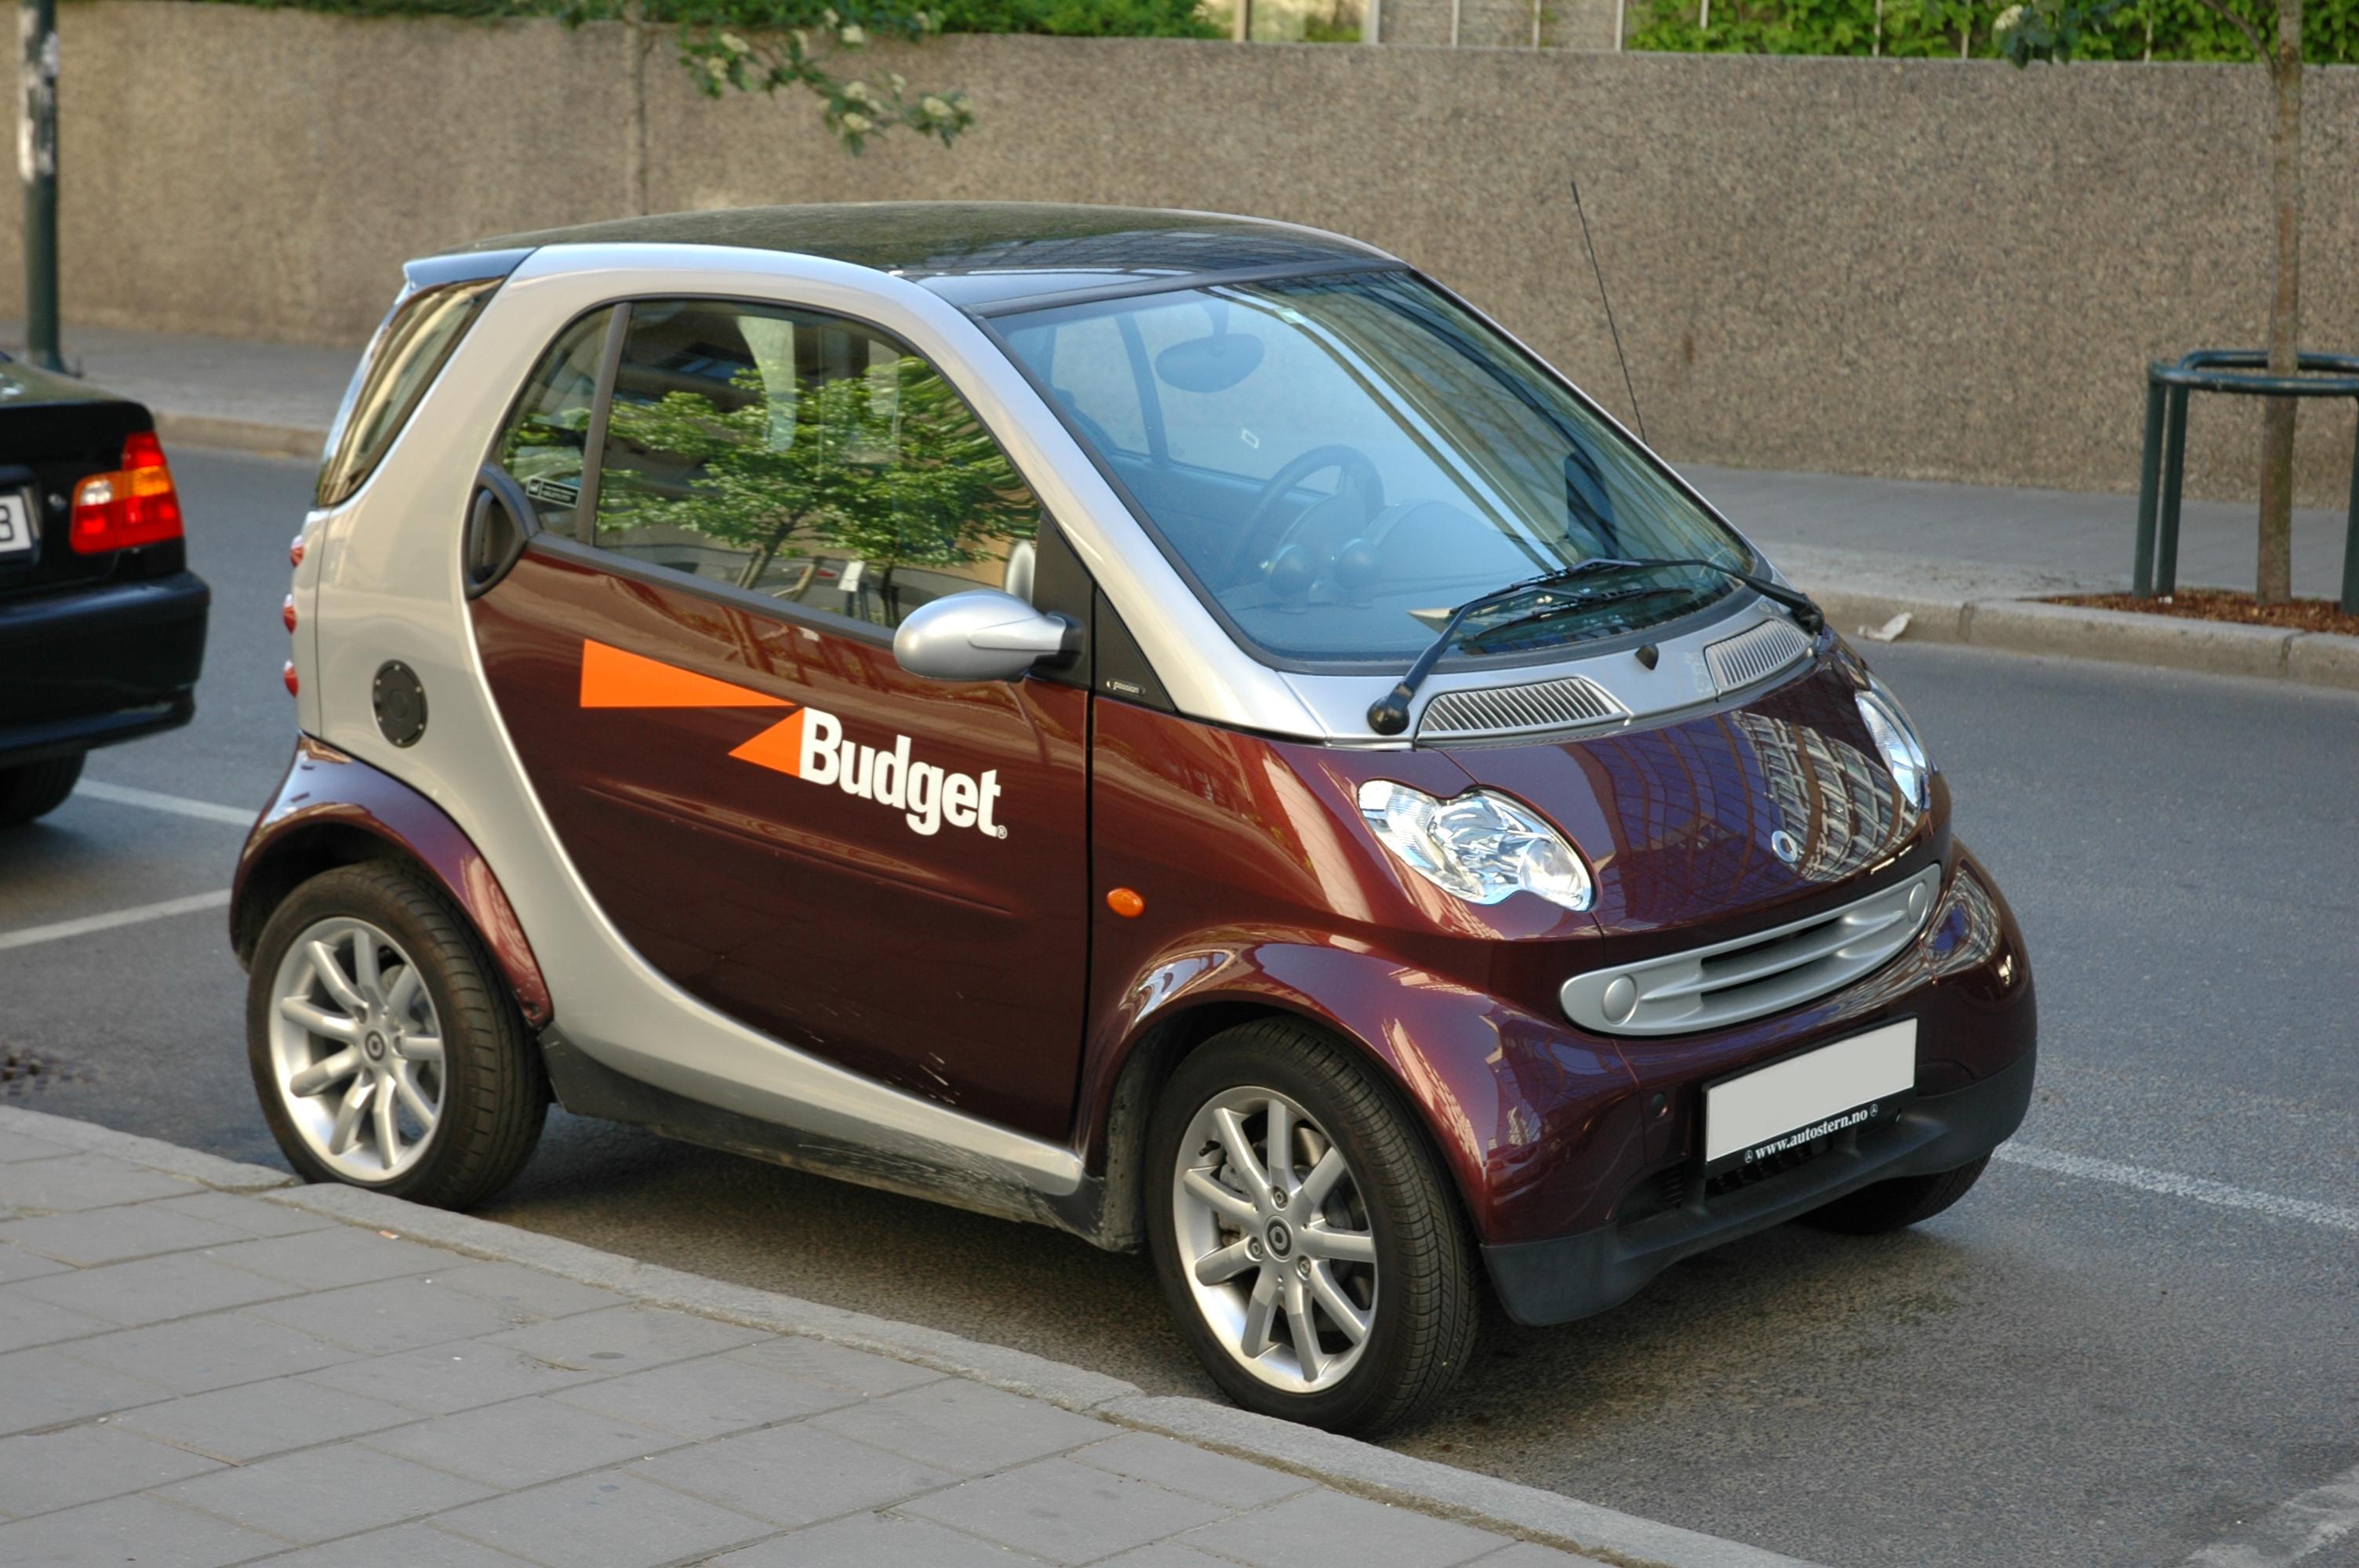 Budget Rent a Car - Wikipedia